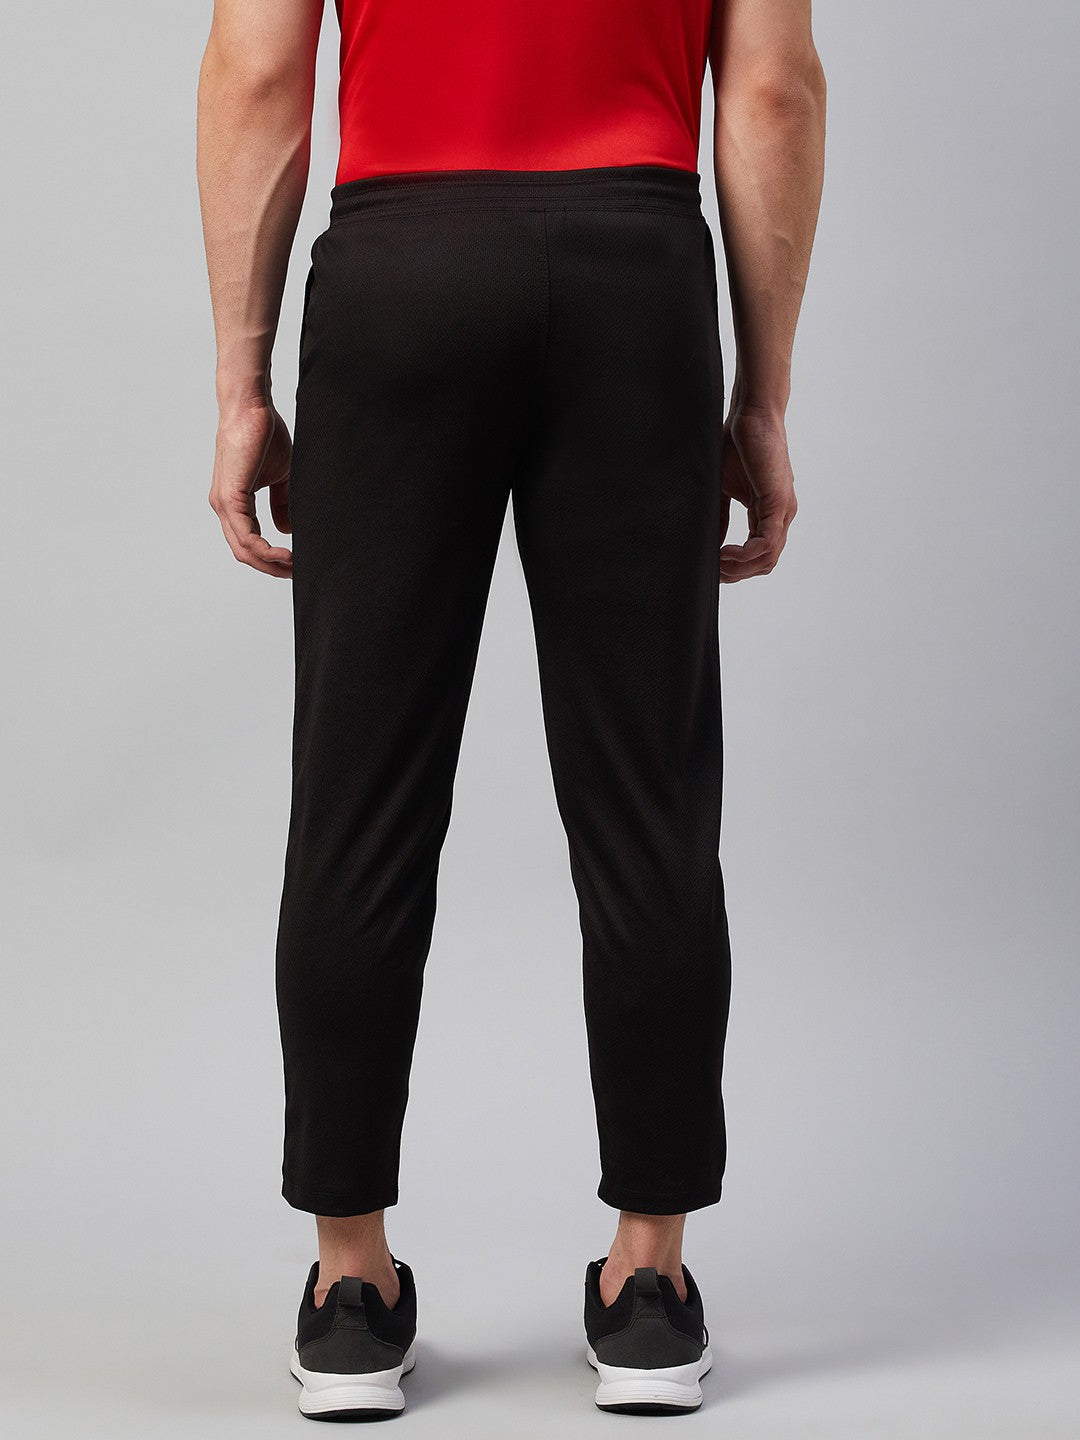 Men Printed Grey/Olive Night Track Pants (Pack of 2)